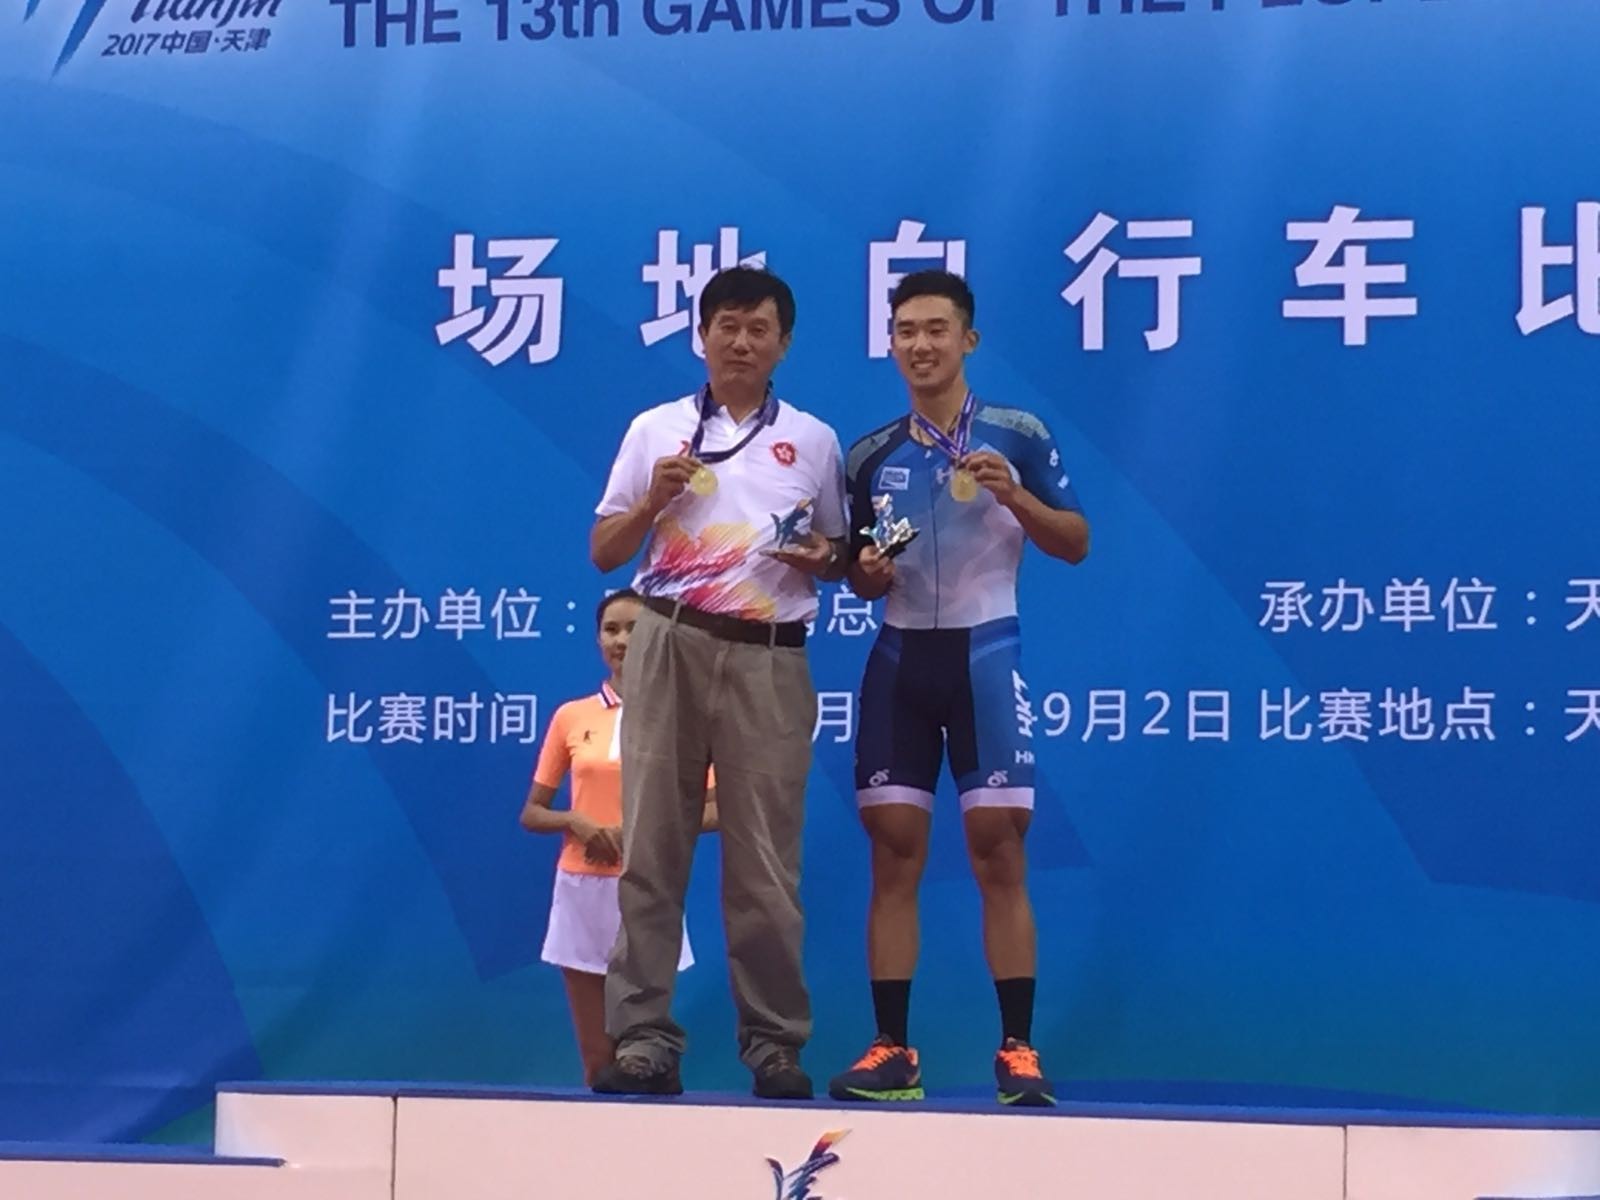 Hong Kong's Leung Chun-wing (right) and his coach Shen Jinkang celebrate winning gold in the men's omnium at the National Games in Tianjin. Photo: Handout